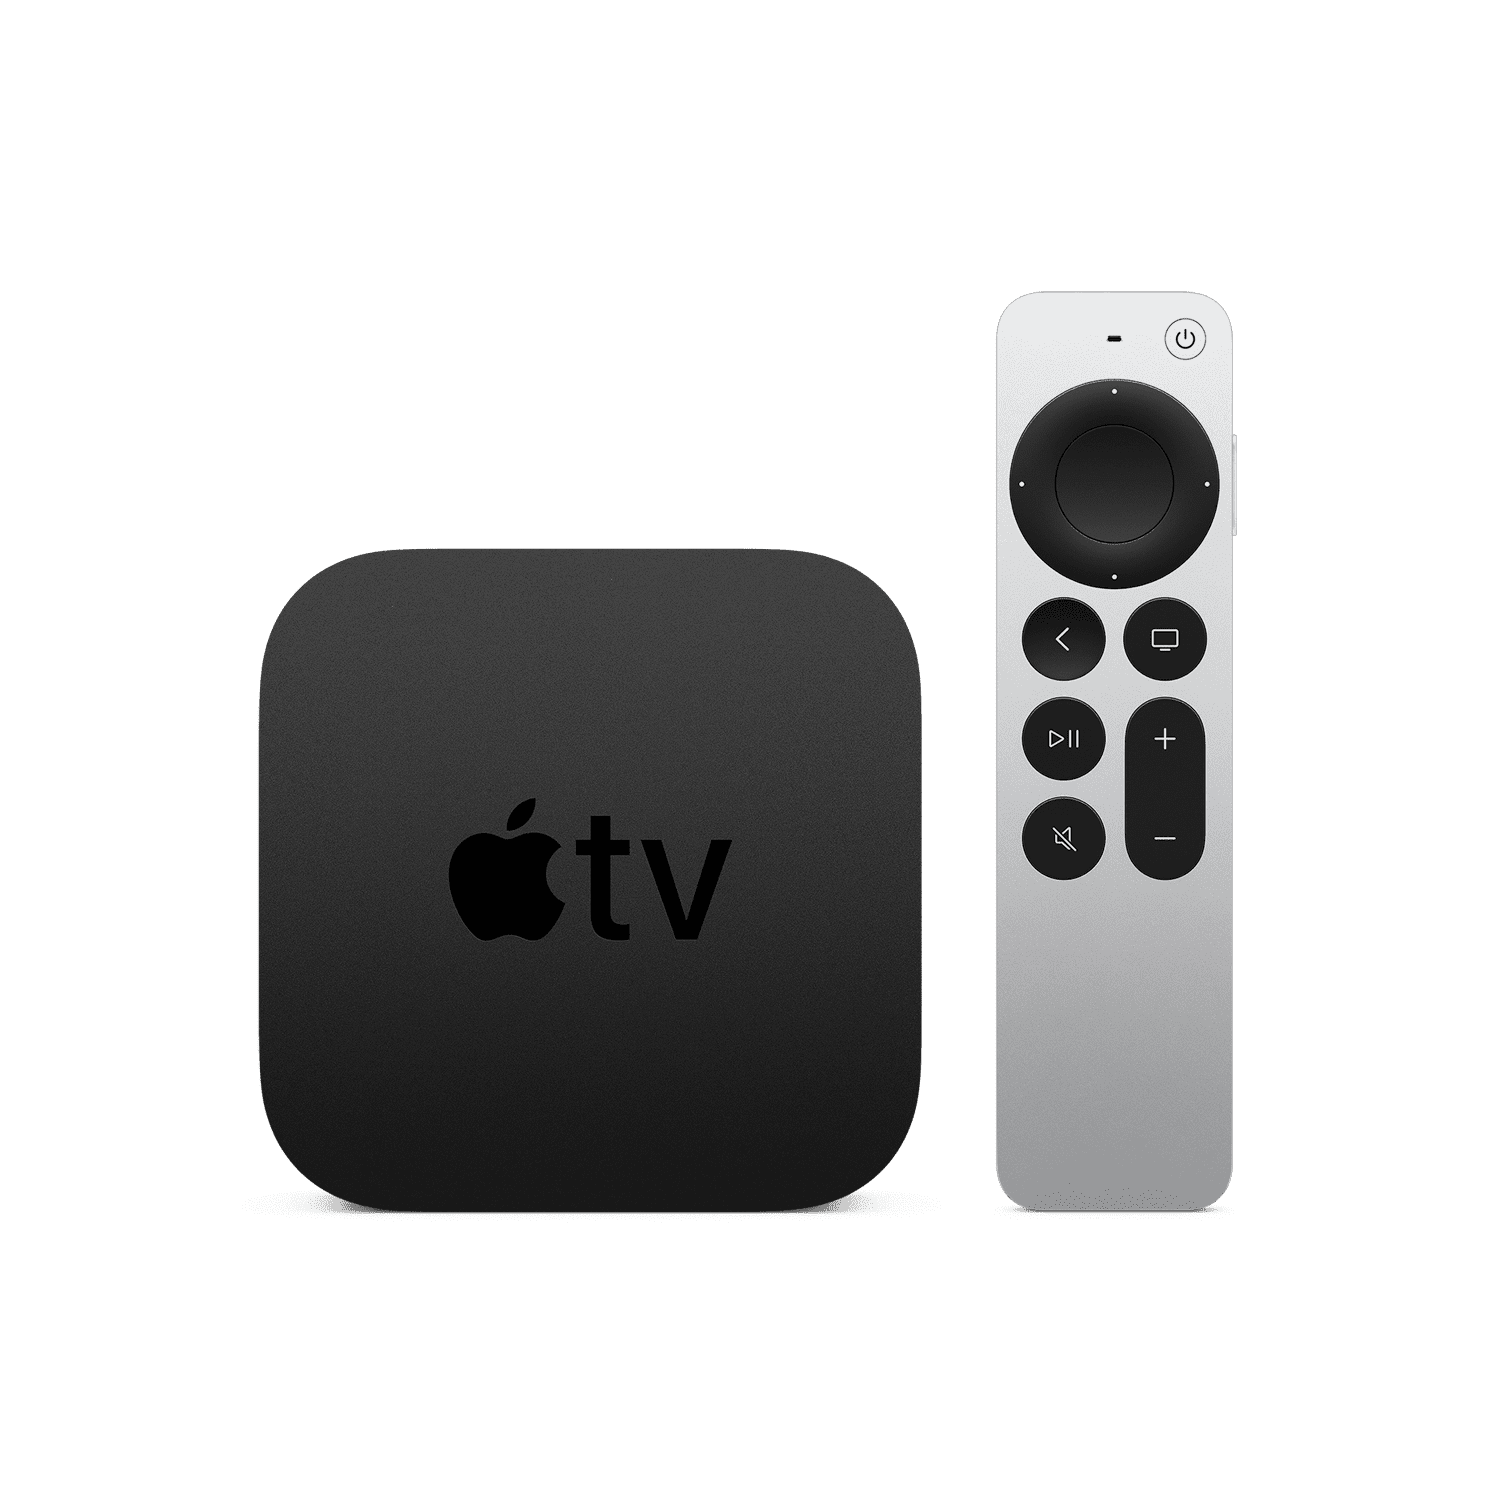 Apple TV 4K, Apple TV, AirPods, Beats